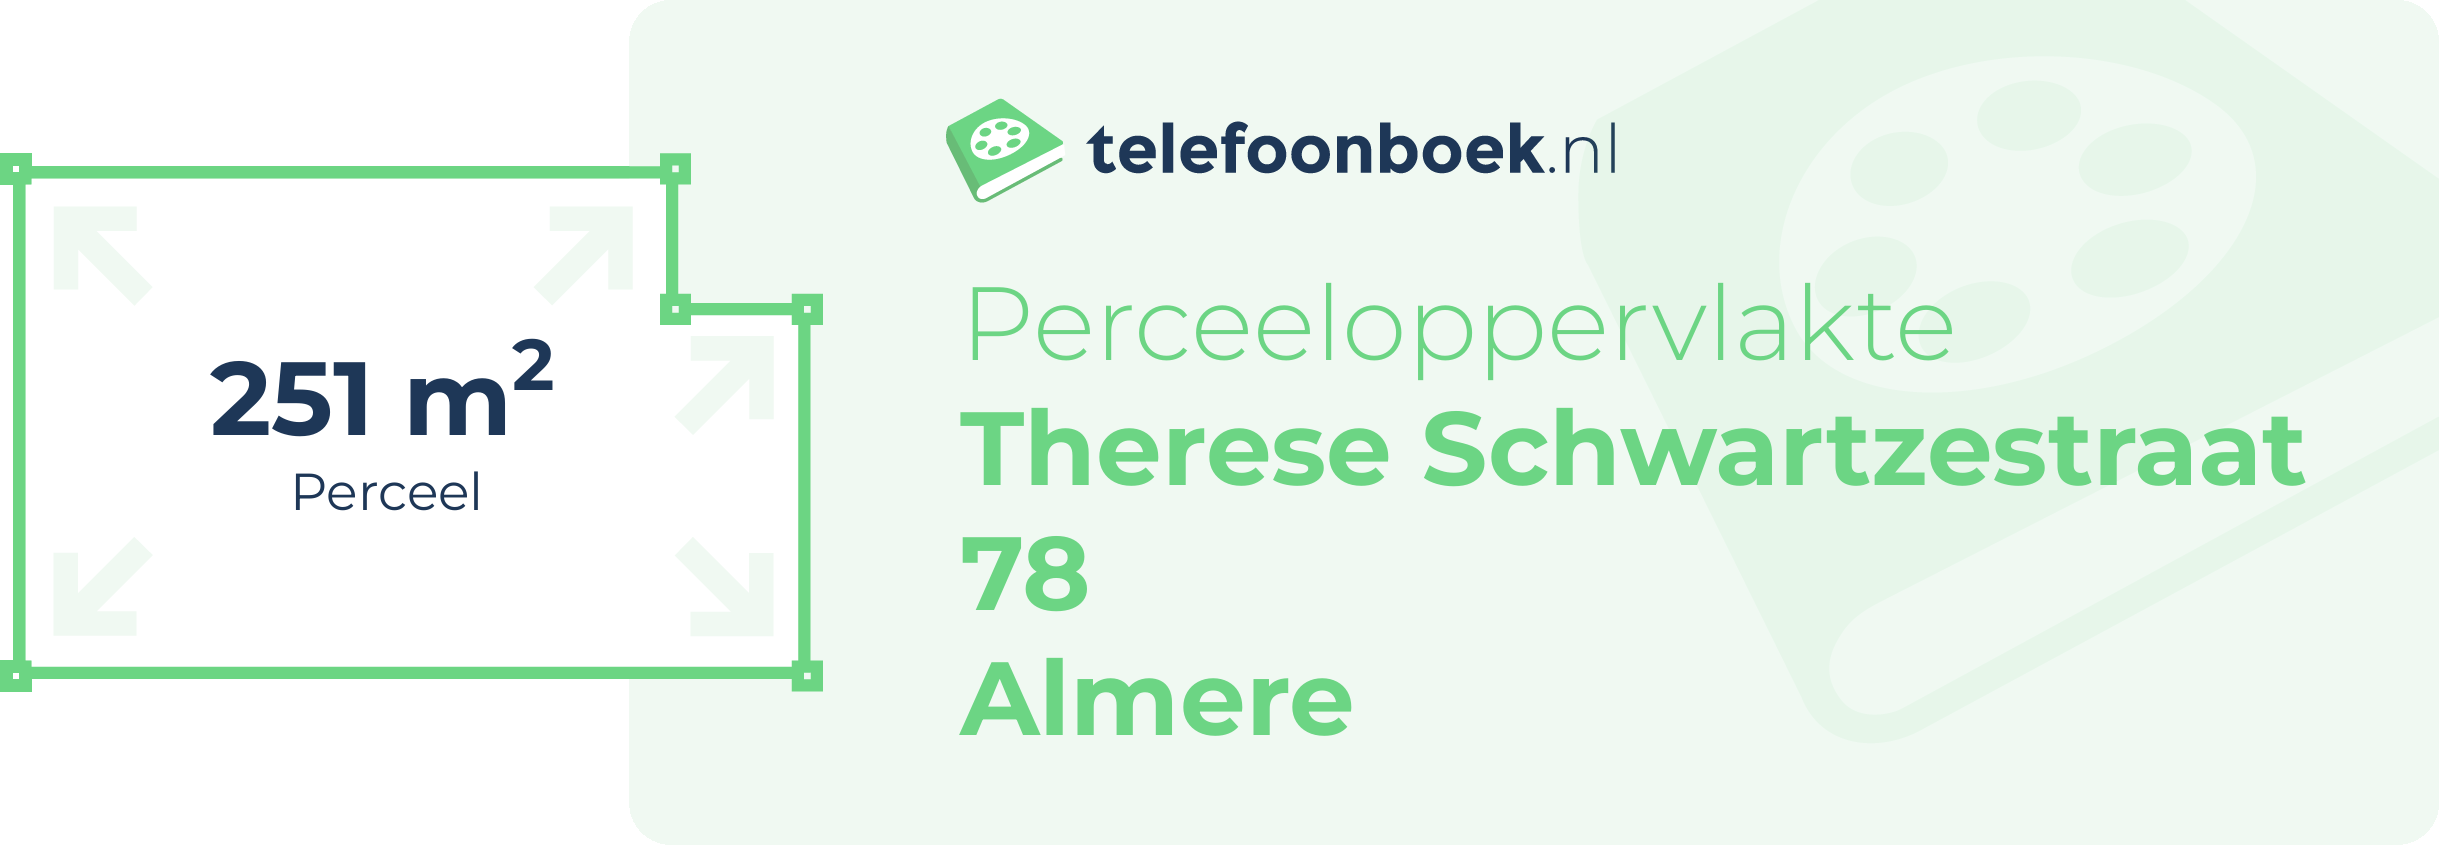 Perceeloppervlakte Therese Schwartzestraat 78 Almere